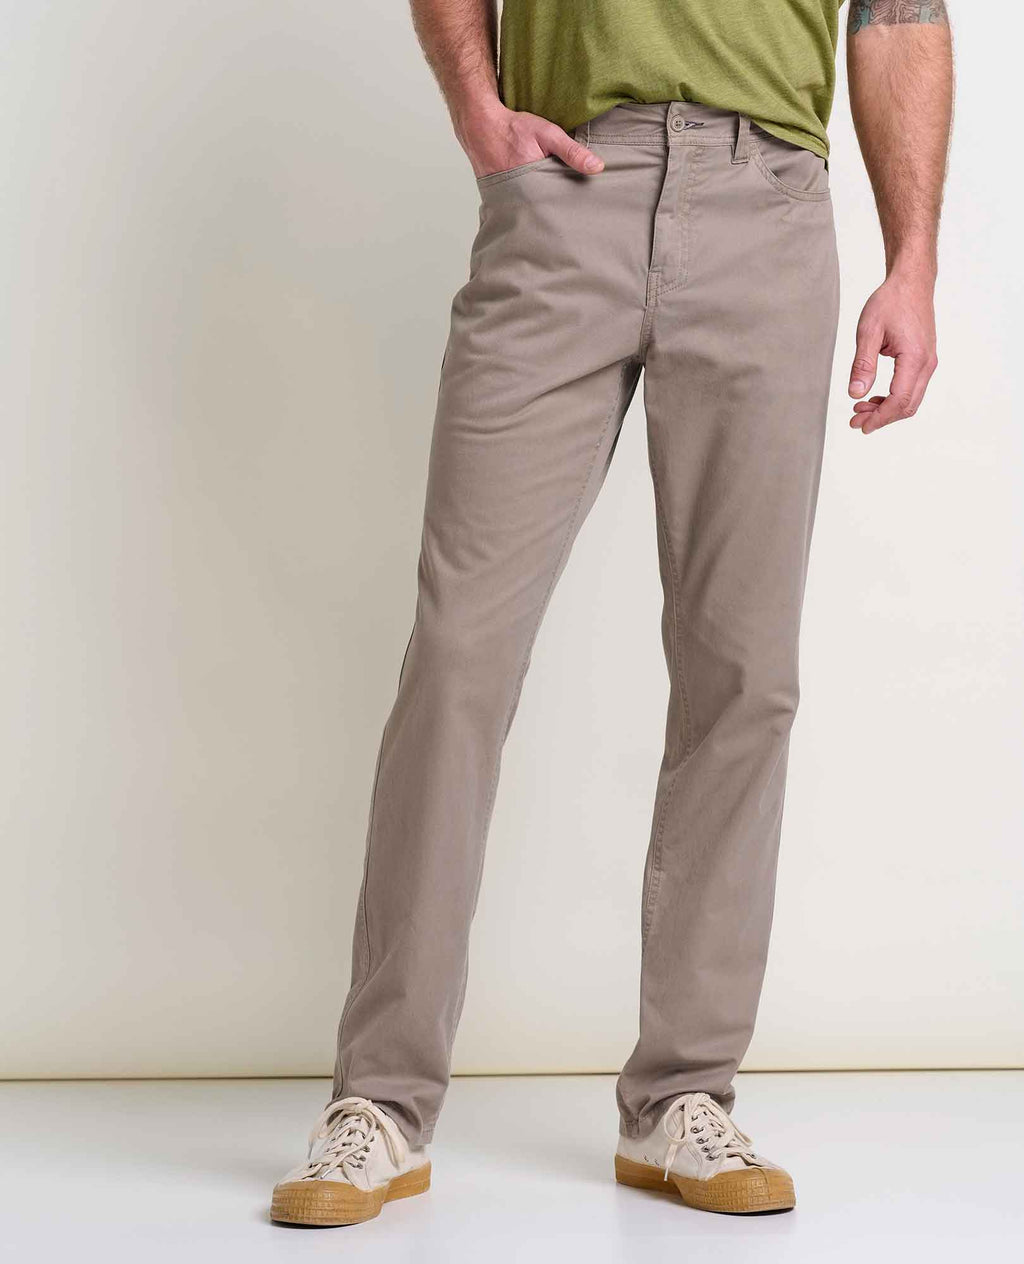 Rsq Mid Length 9 Chino Shorts - Desert - 28